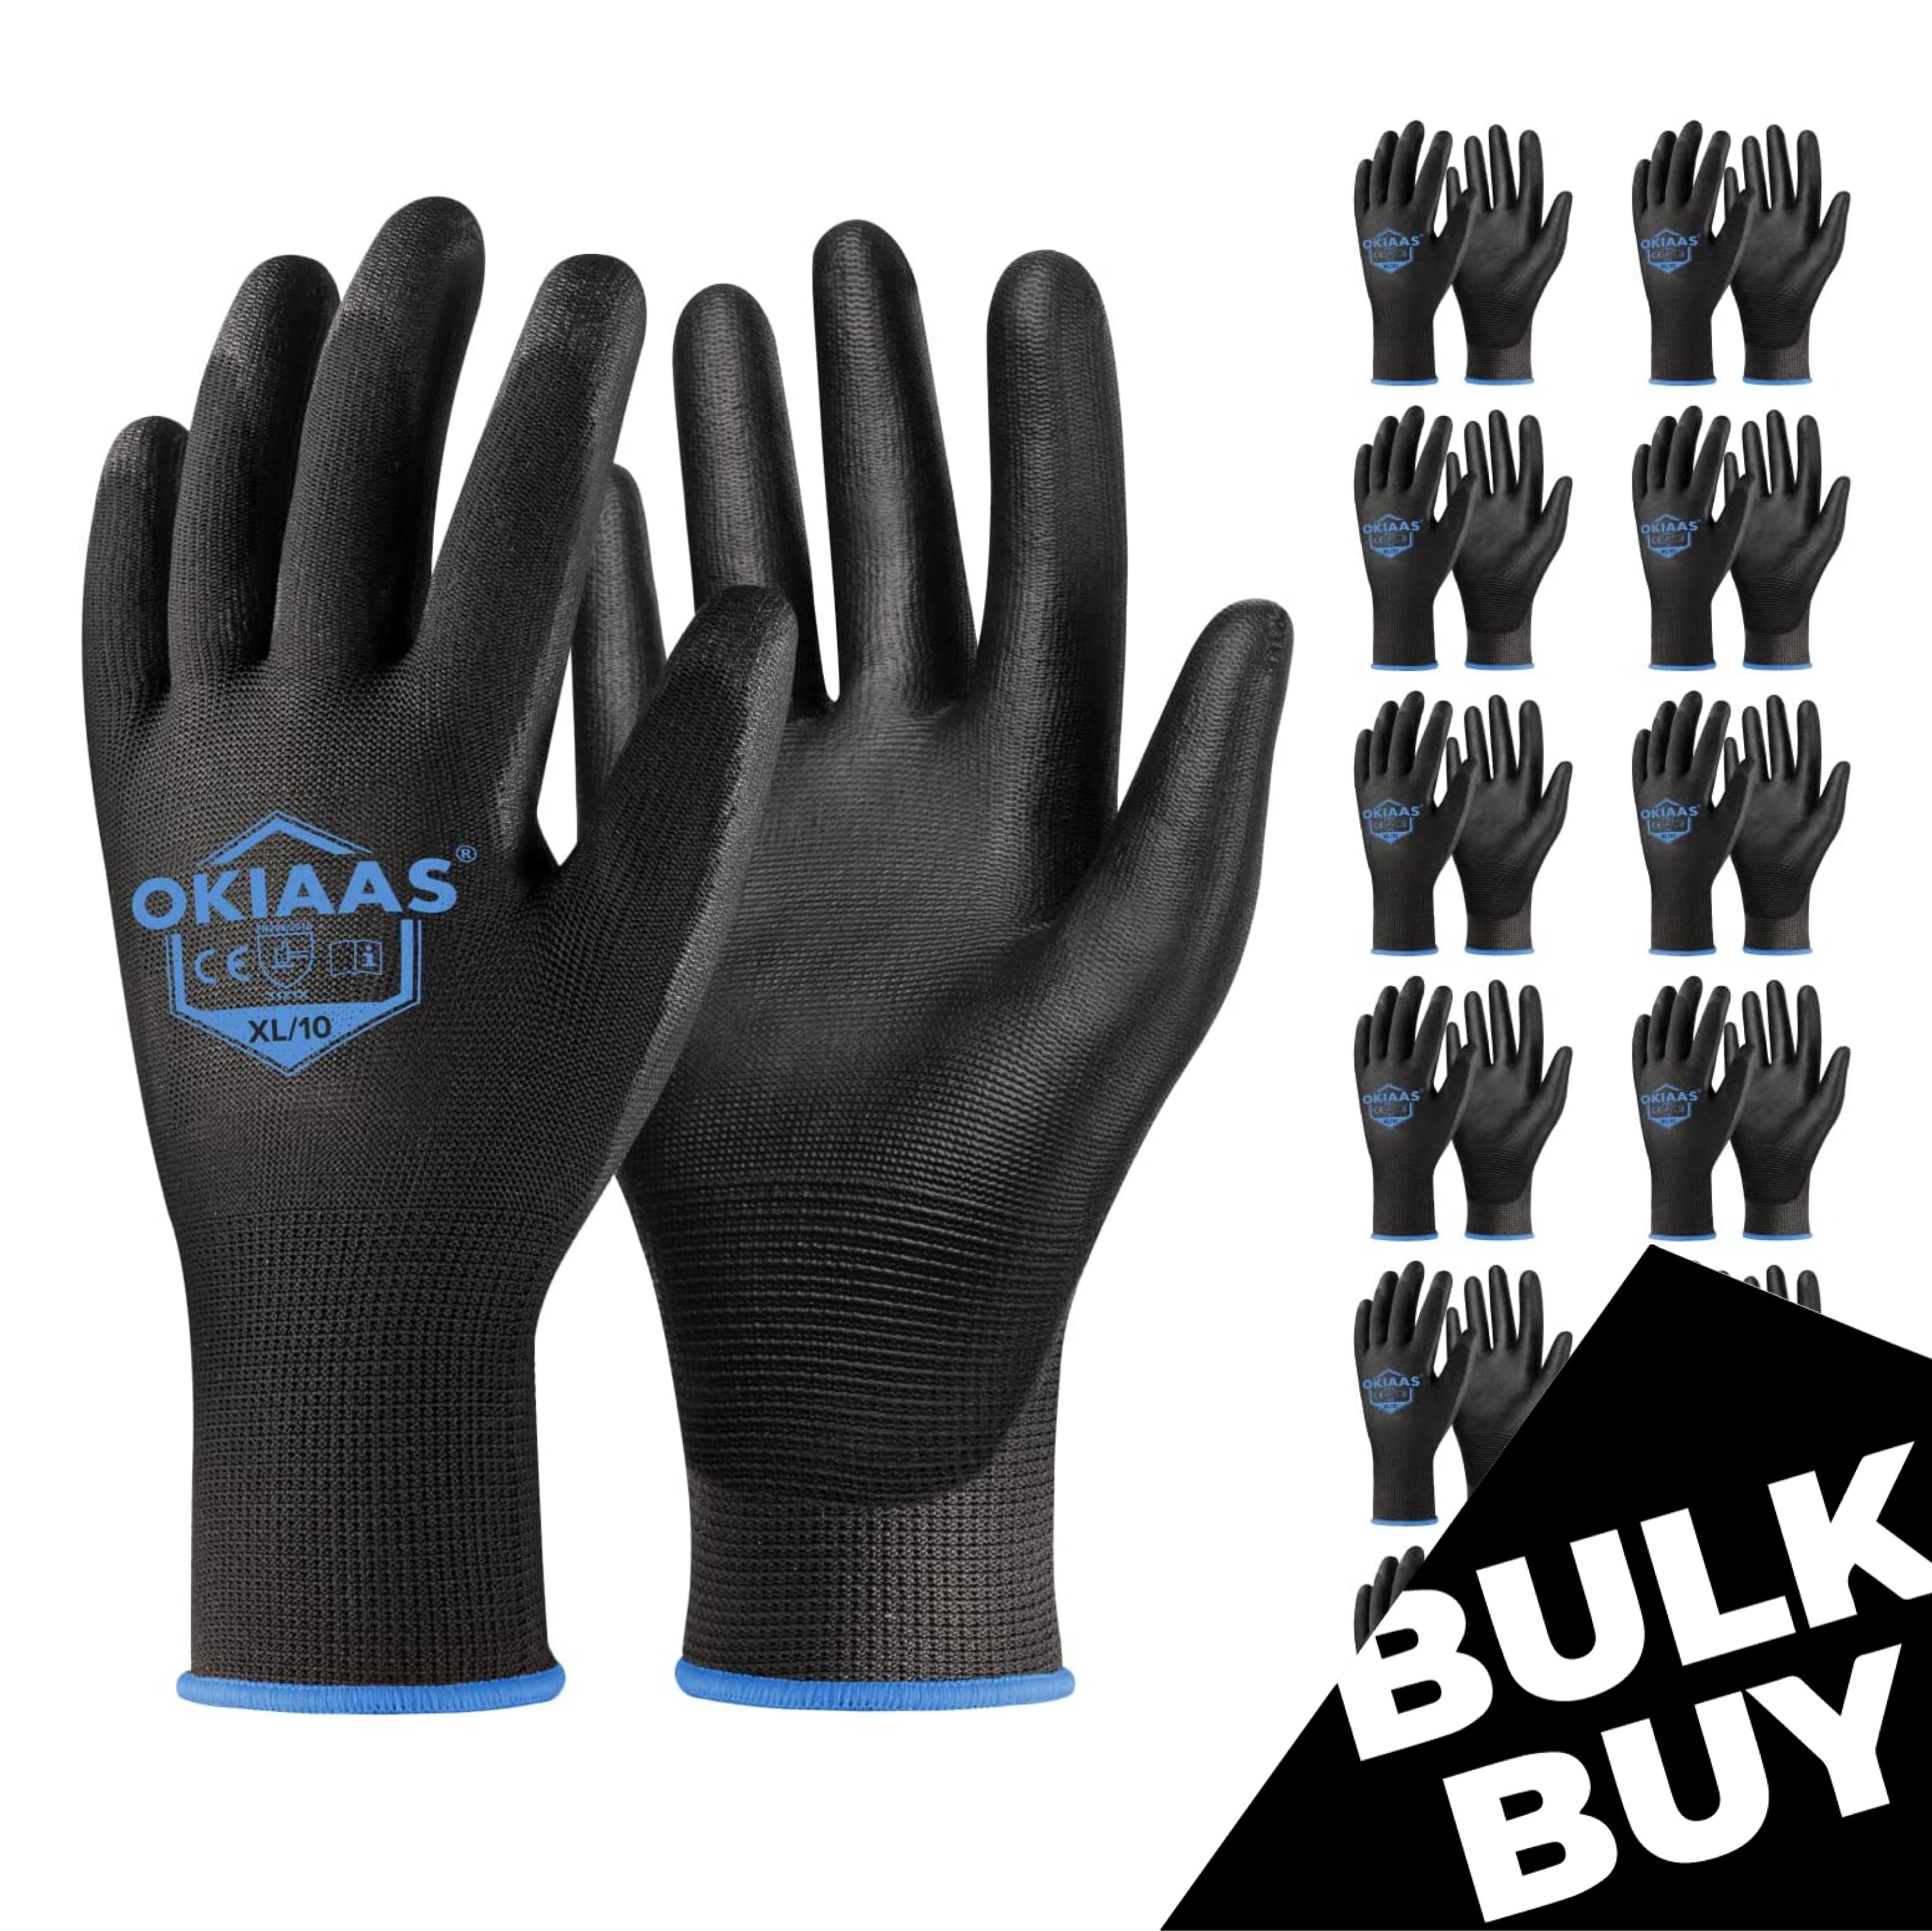 [Bulk Buy] 60 Pair Safety Polyurethane Dipped Work Gloves, for Mechanic, Warehouse